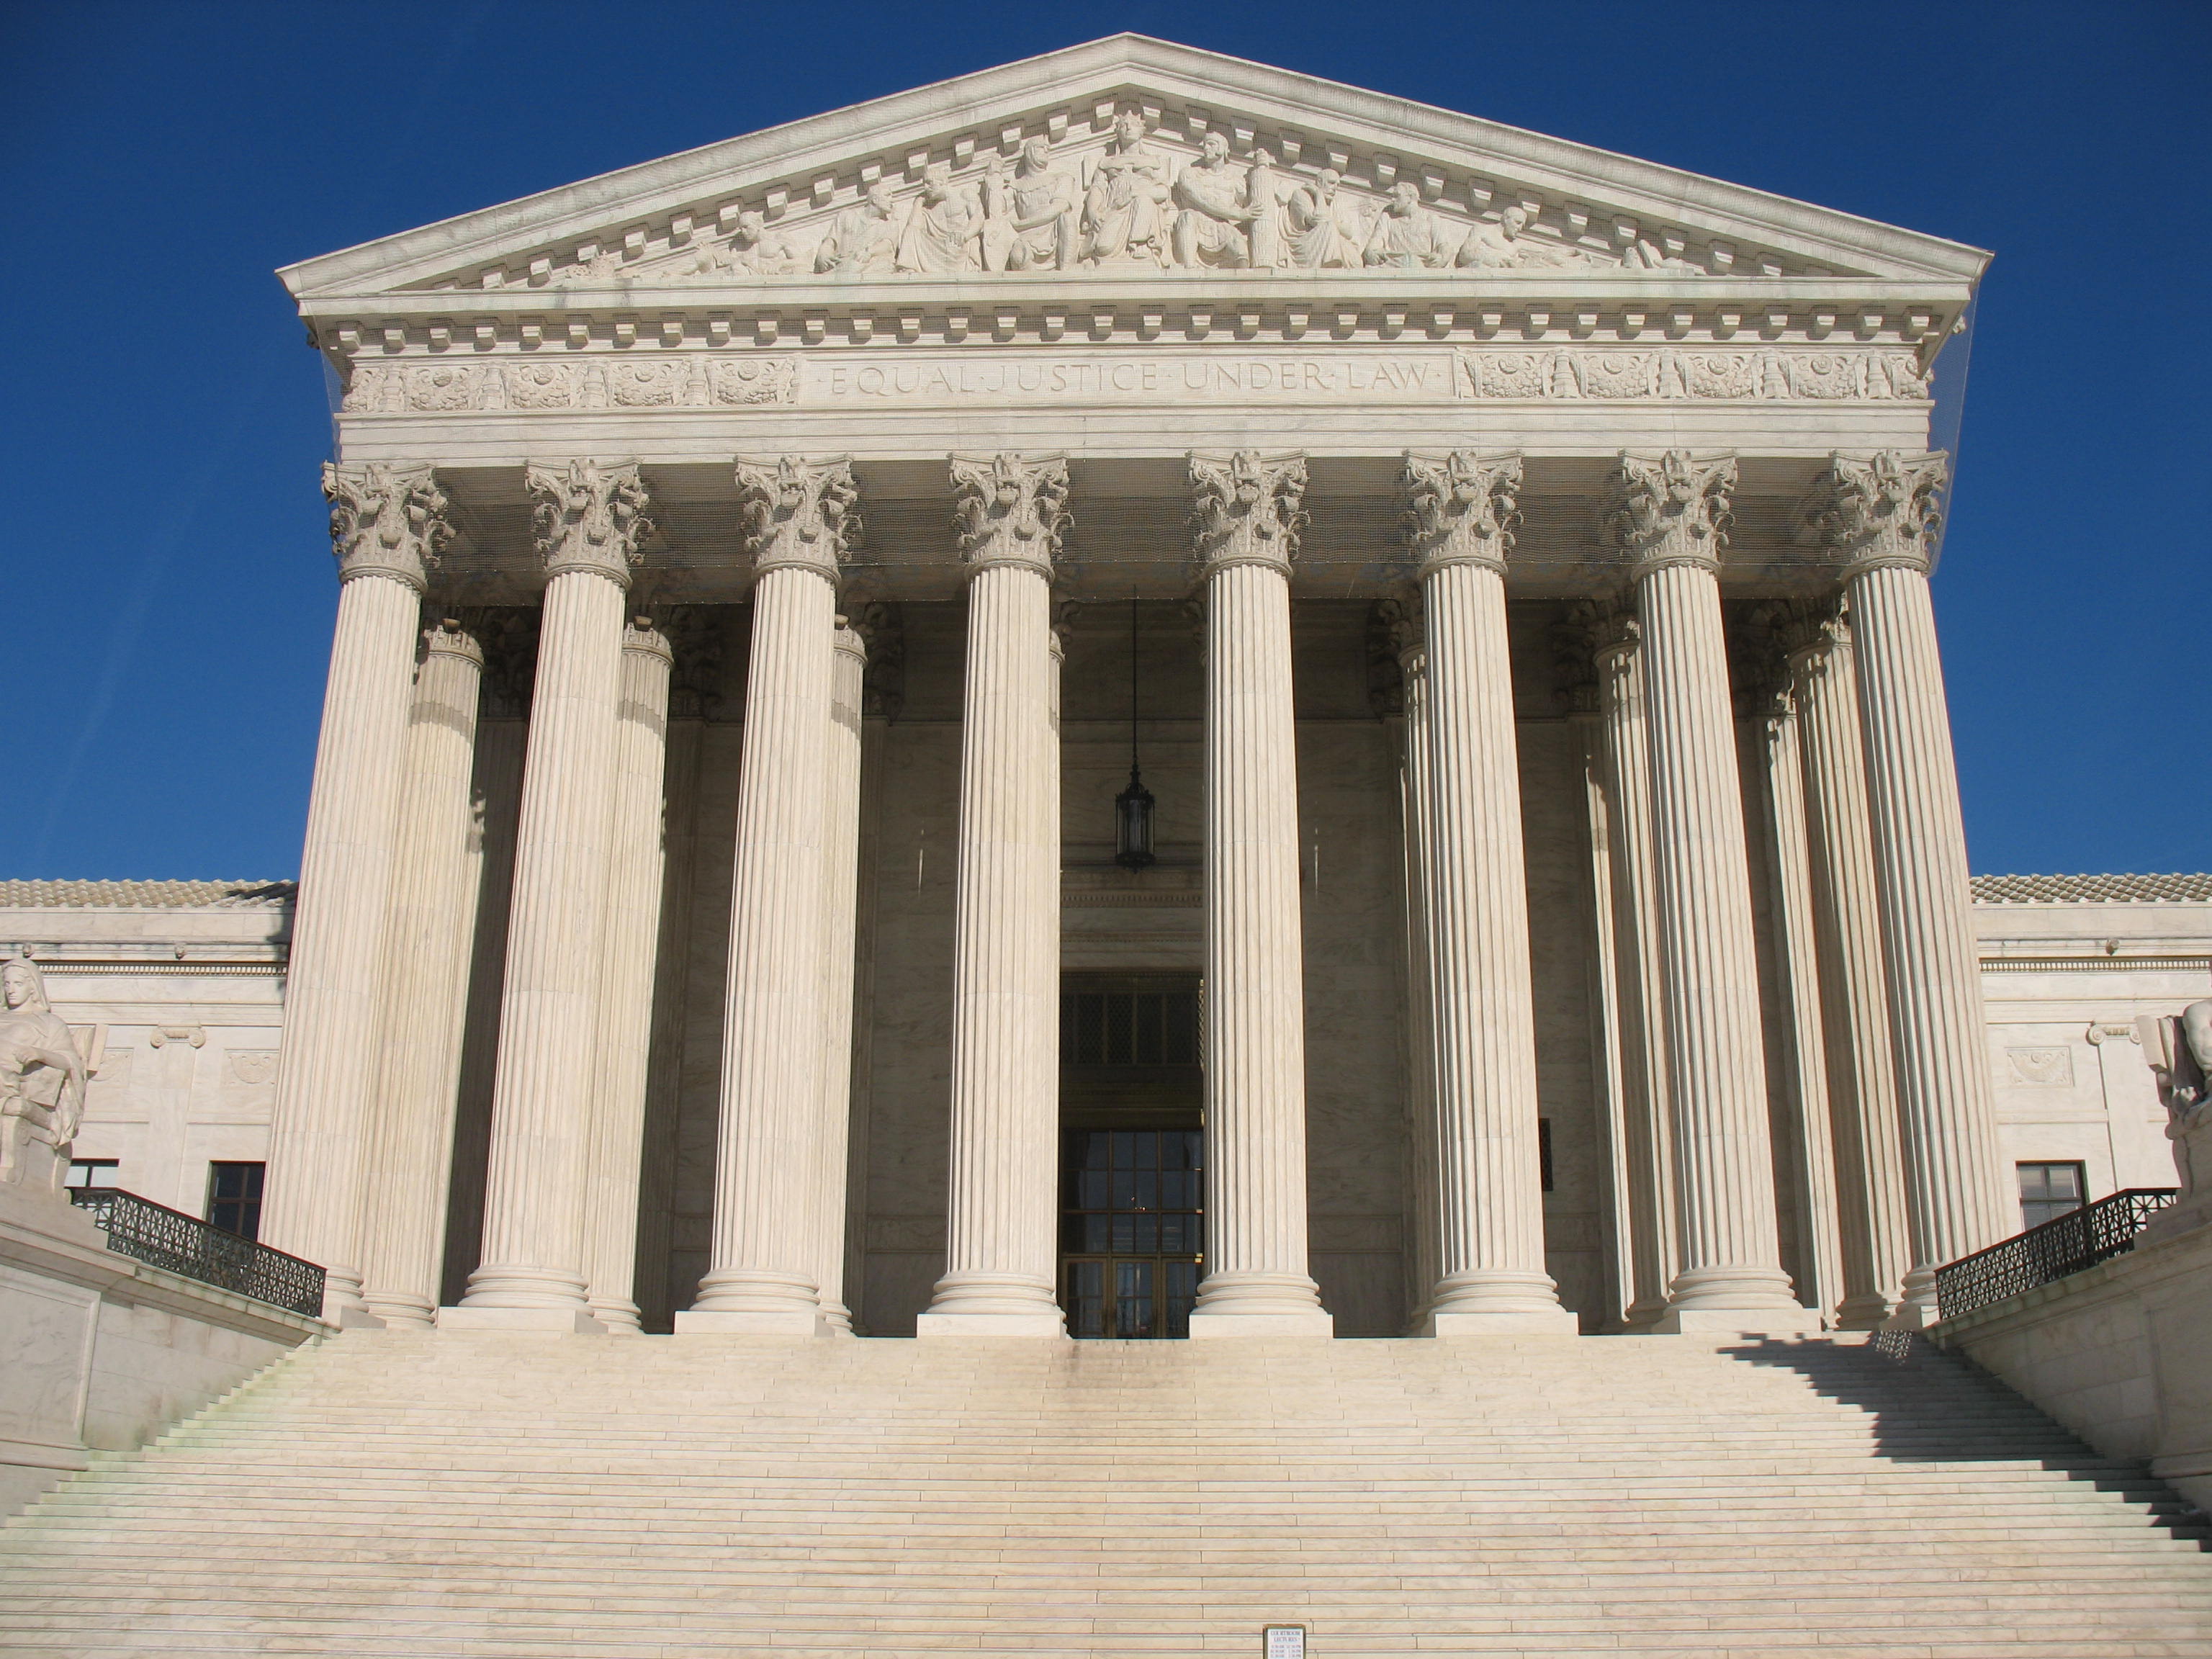 FileUS Supreme Court.JPG Wikimedia Commons